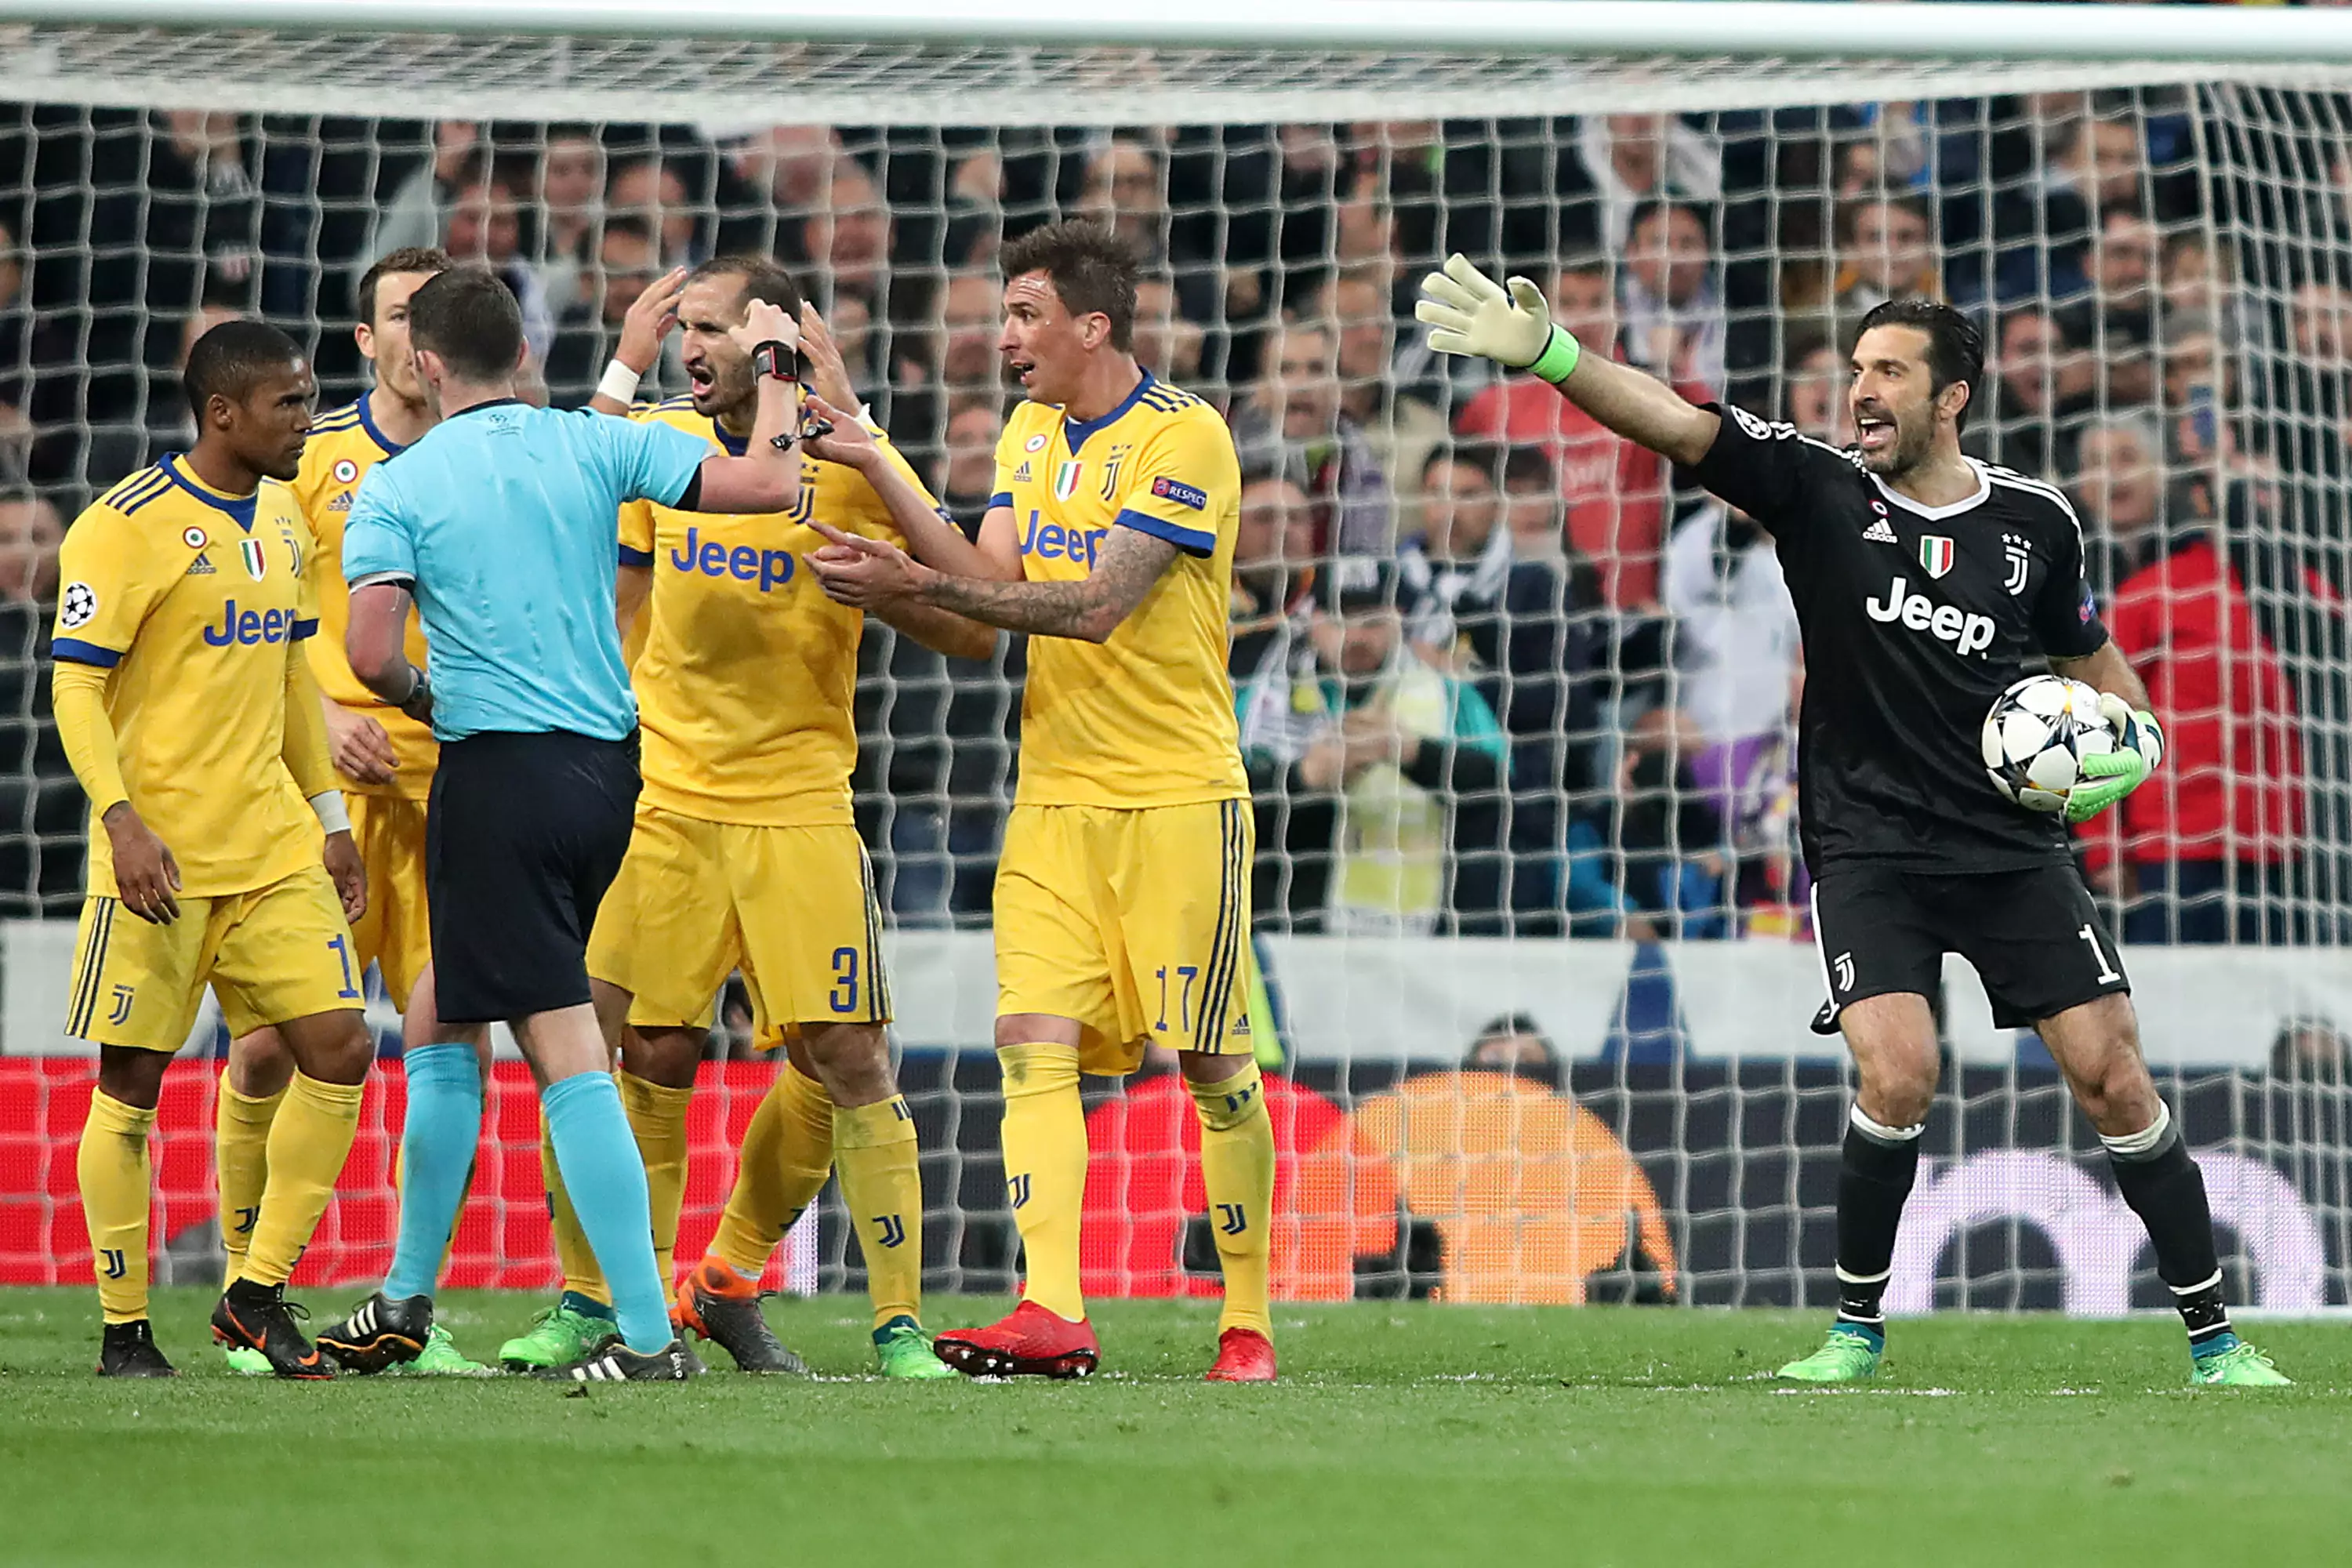 Buffon reacts to Oliver awarding a penalty. Image: PA